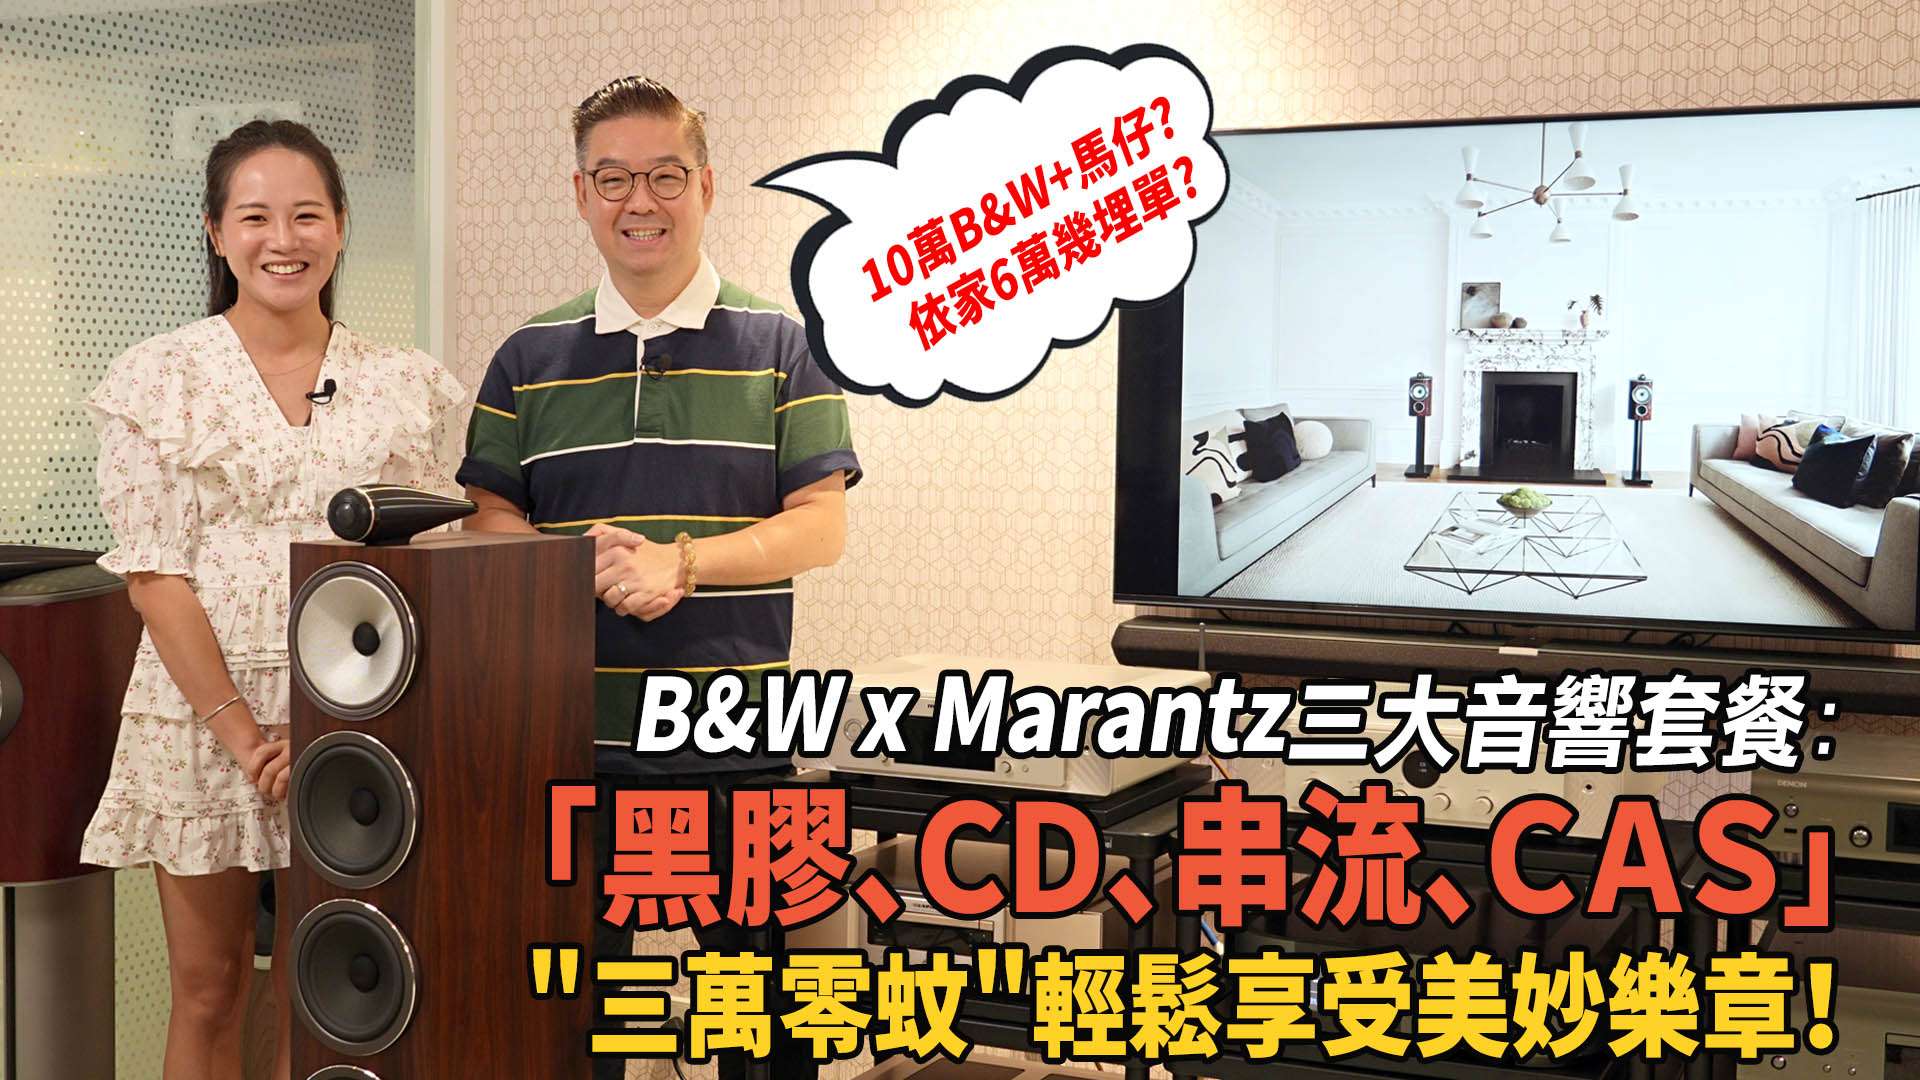 B&W marantz showroom Bundle promo plan forum copy.jpg